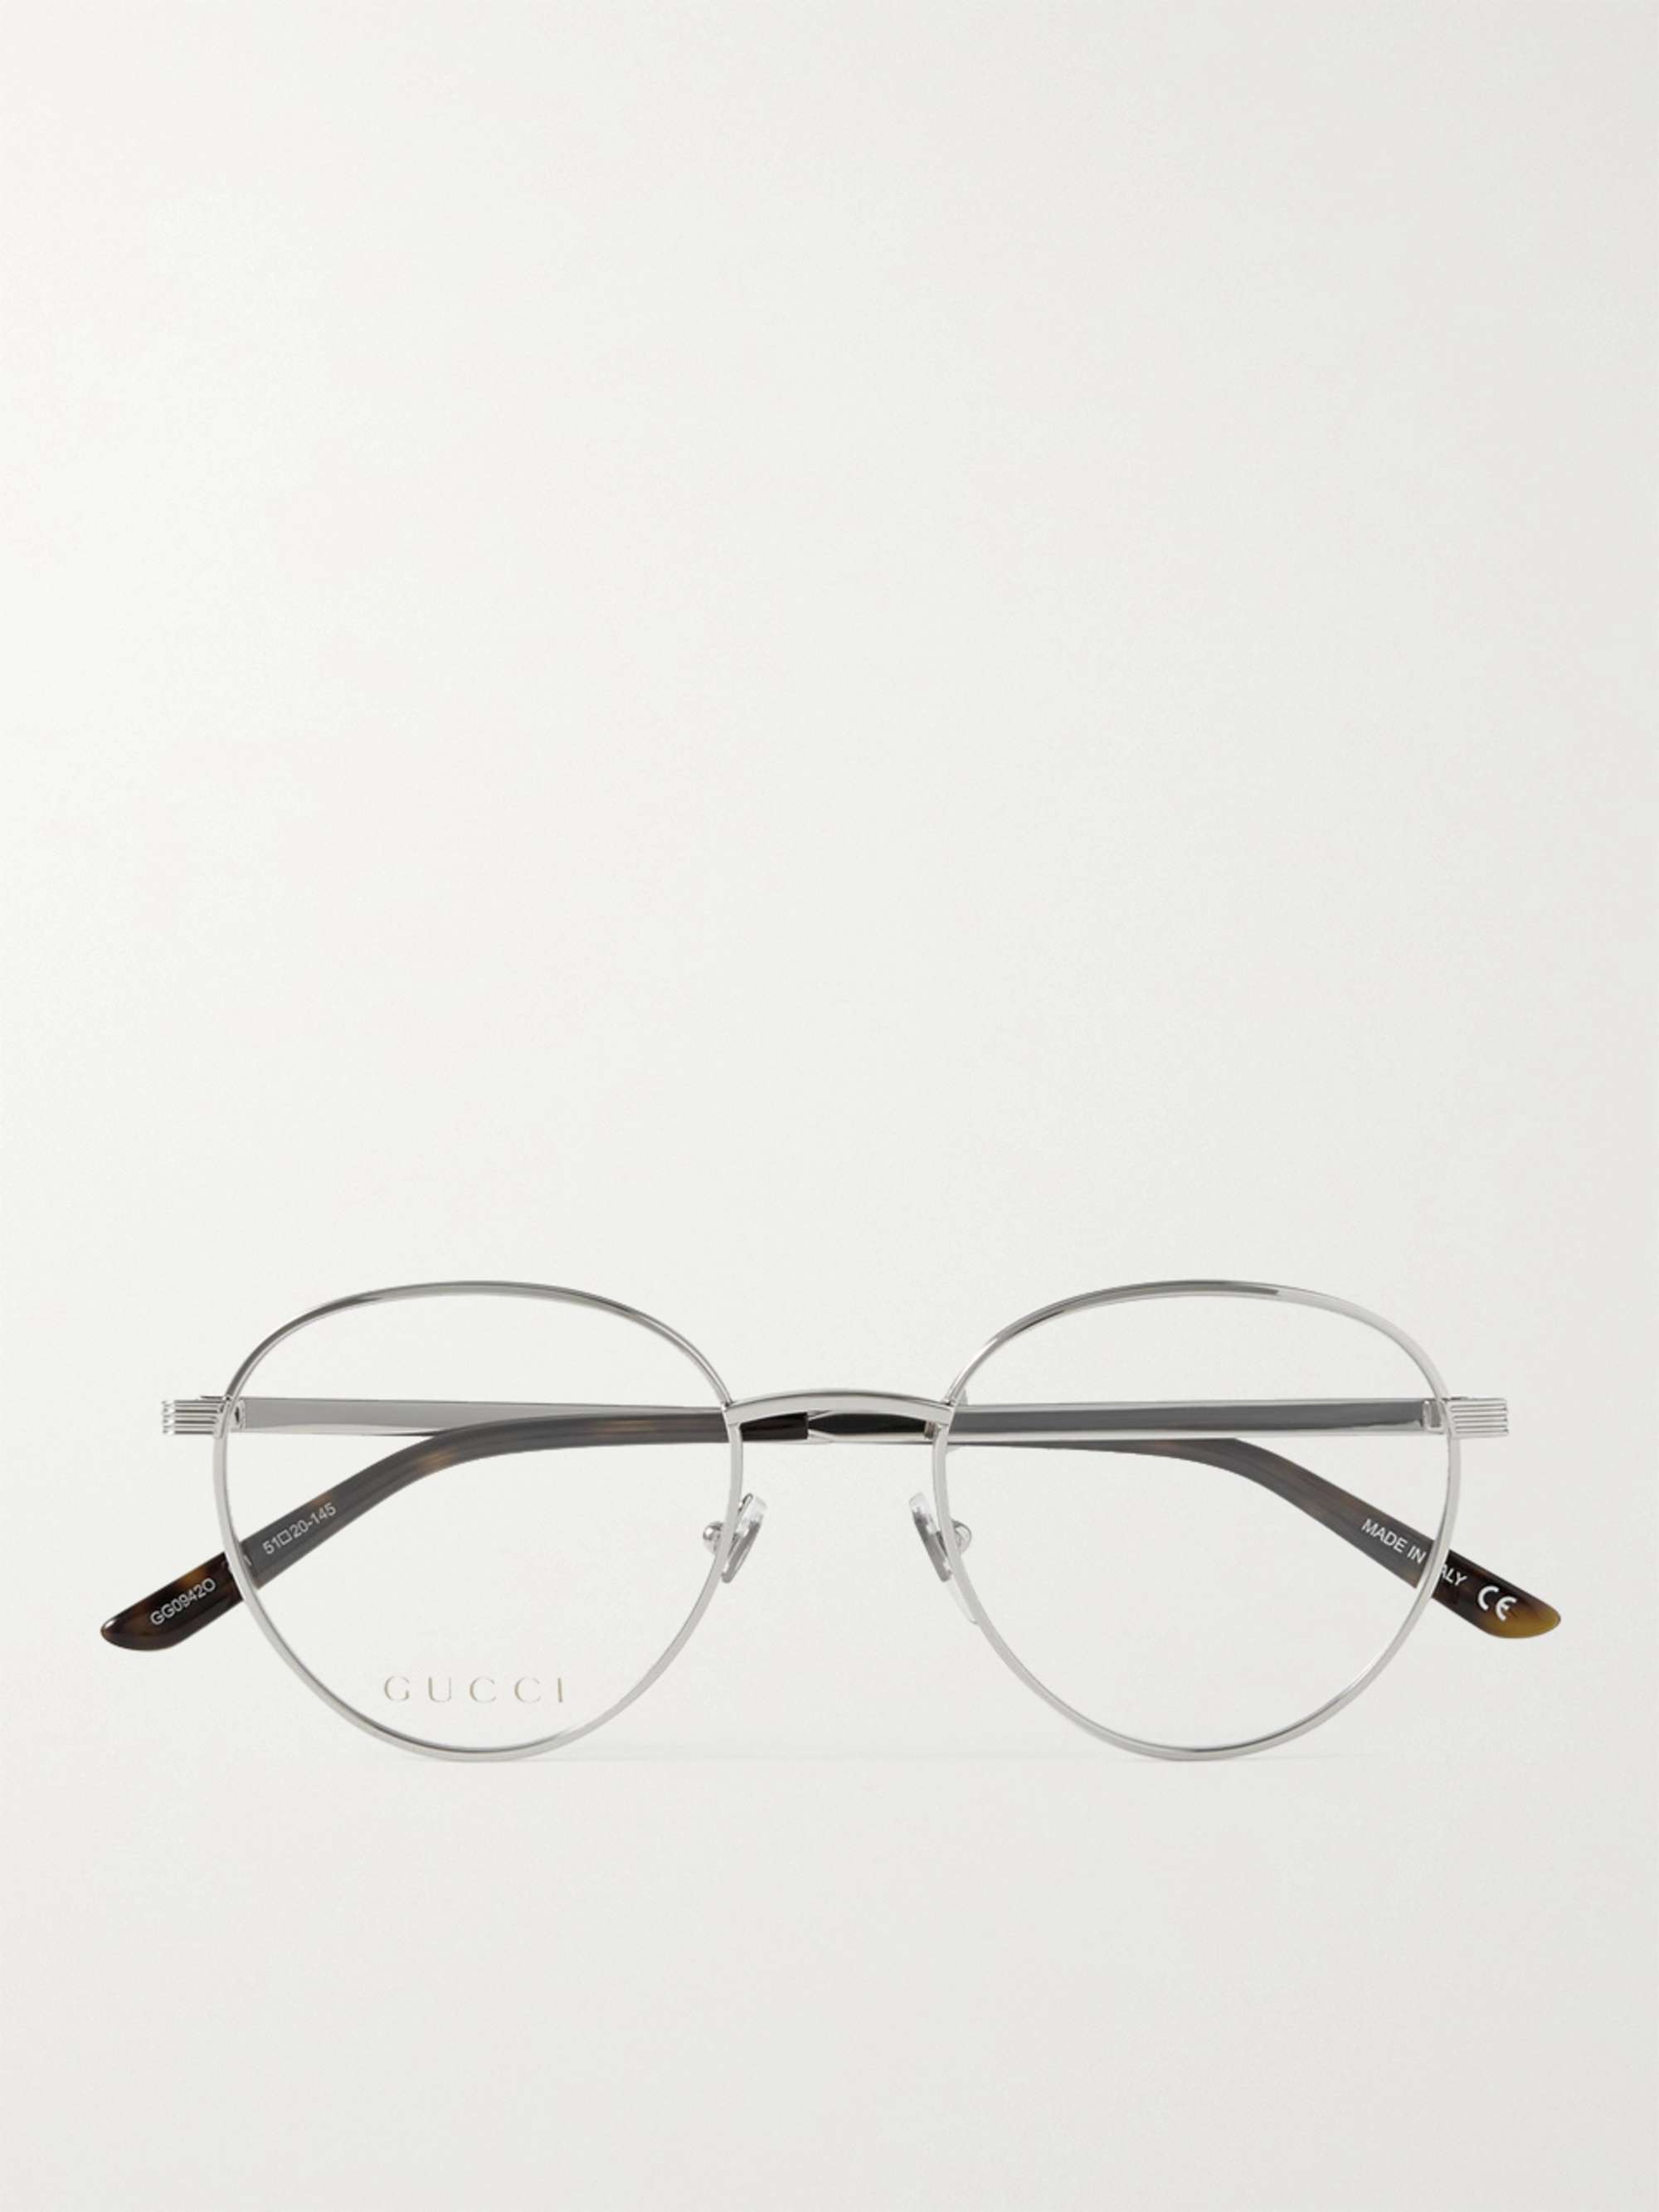 GUCCI EYEWEAR Round-Frame Silver-Tone Optical Glasses